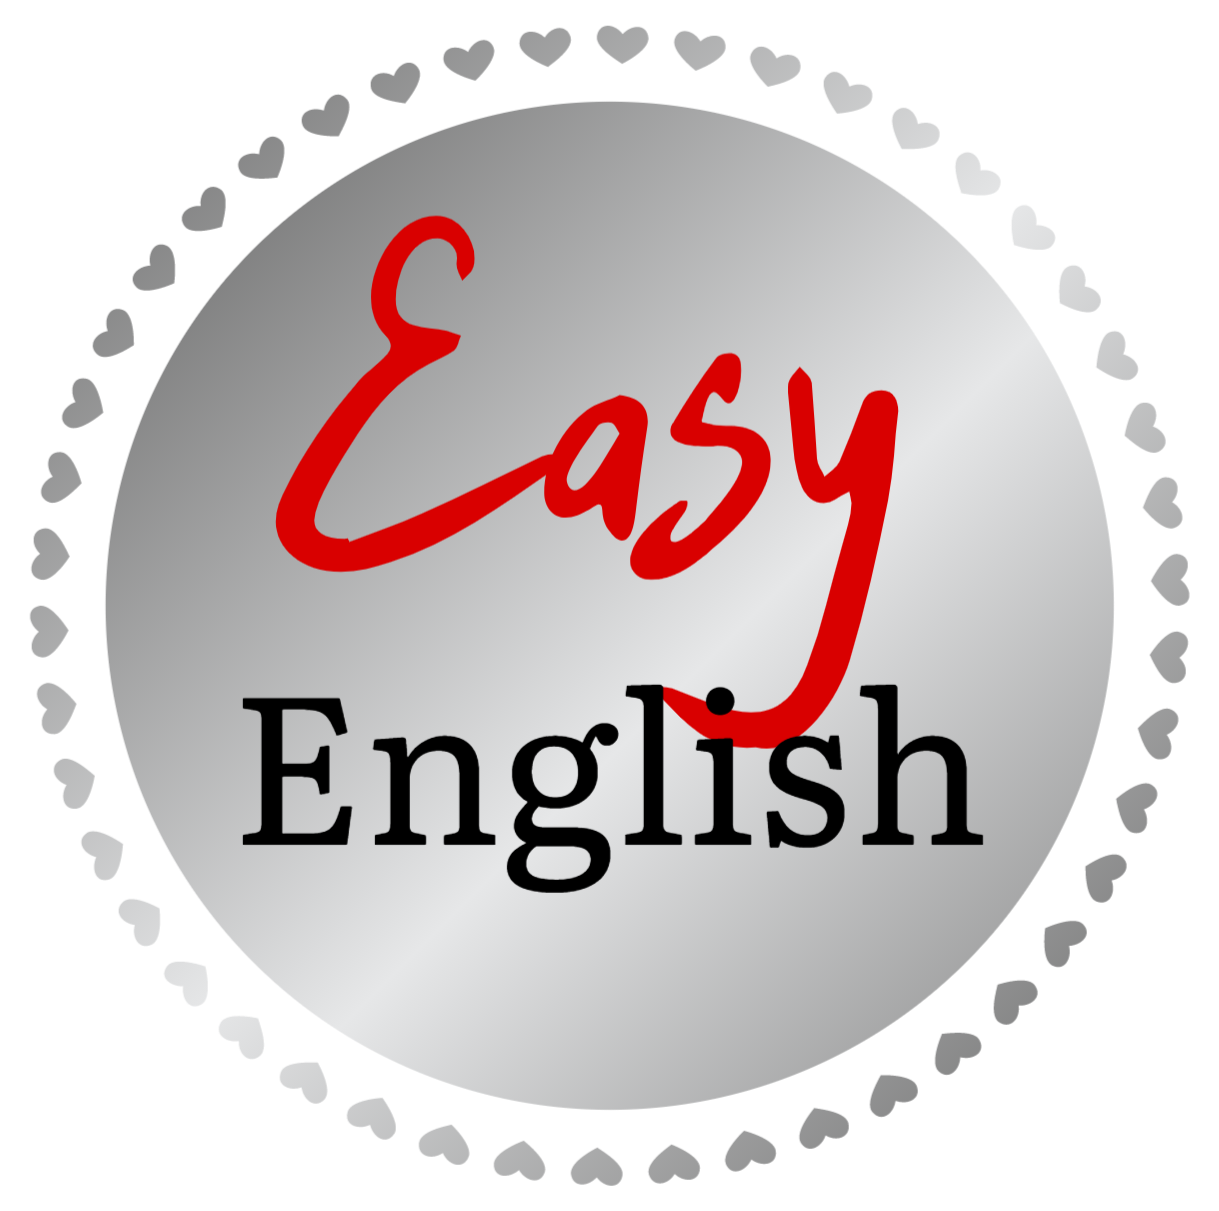 Easy с английского на русский. ИЗИ Инглиш. Легкий английский. Easy English логотип. Easy English картинки.